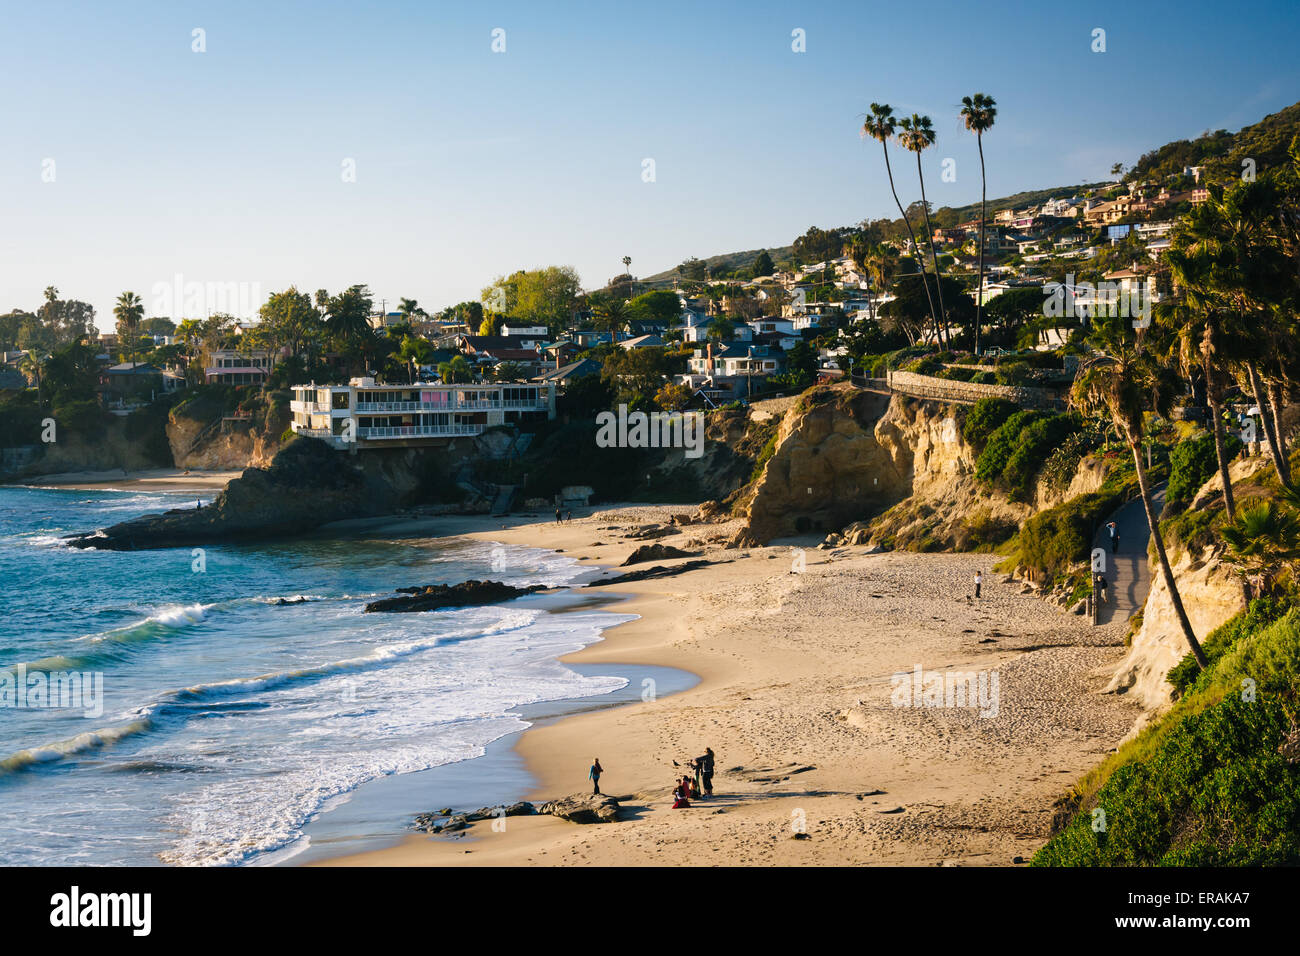 Vista di una spiaggia e l'Oceano Pacifico da scogliere a Heisler Park, in Laguna Beach in California. Foto Stock